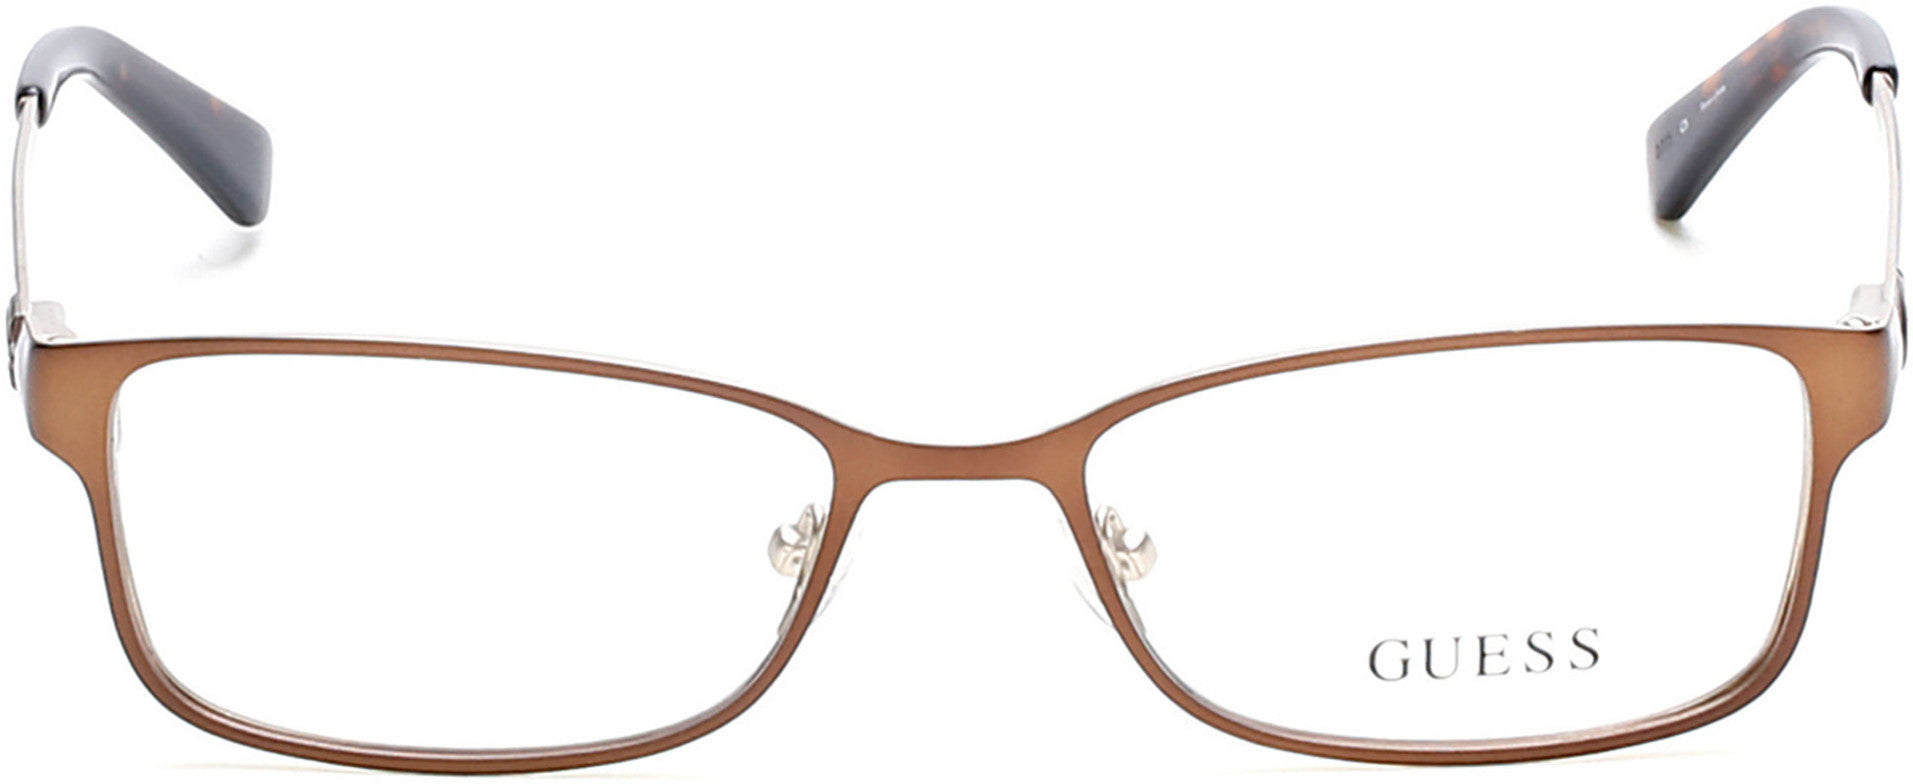 Guess GU2568 Rectangular Eyeglasses 050-050 - Dark Brown/other